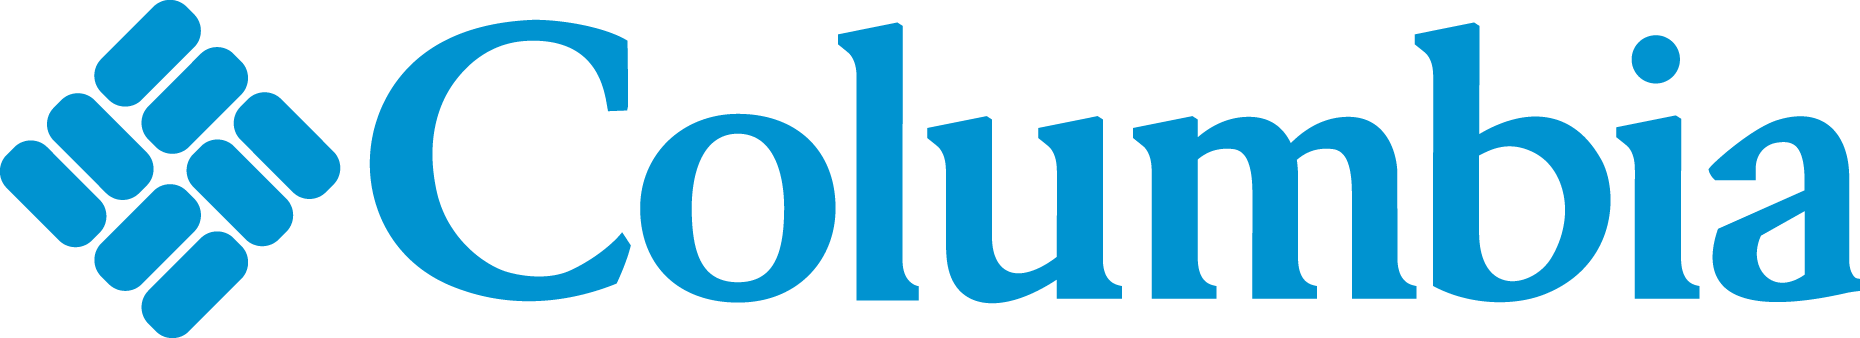 COLUMBIA columbia_logo logo marki